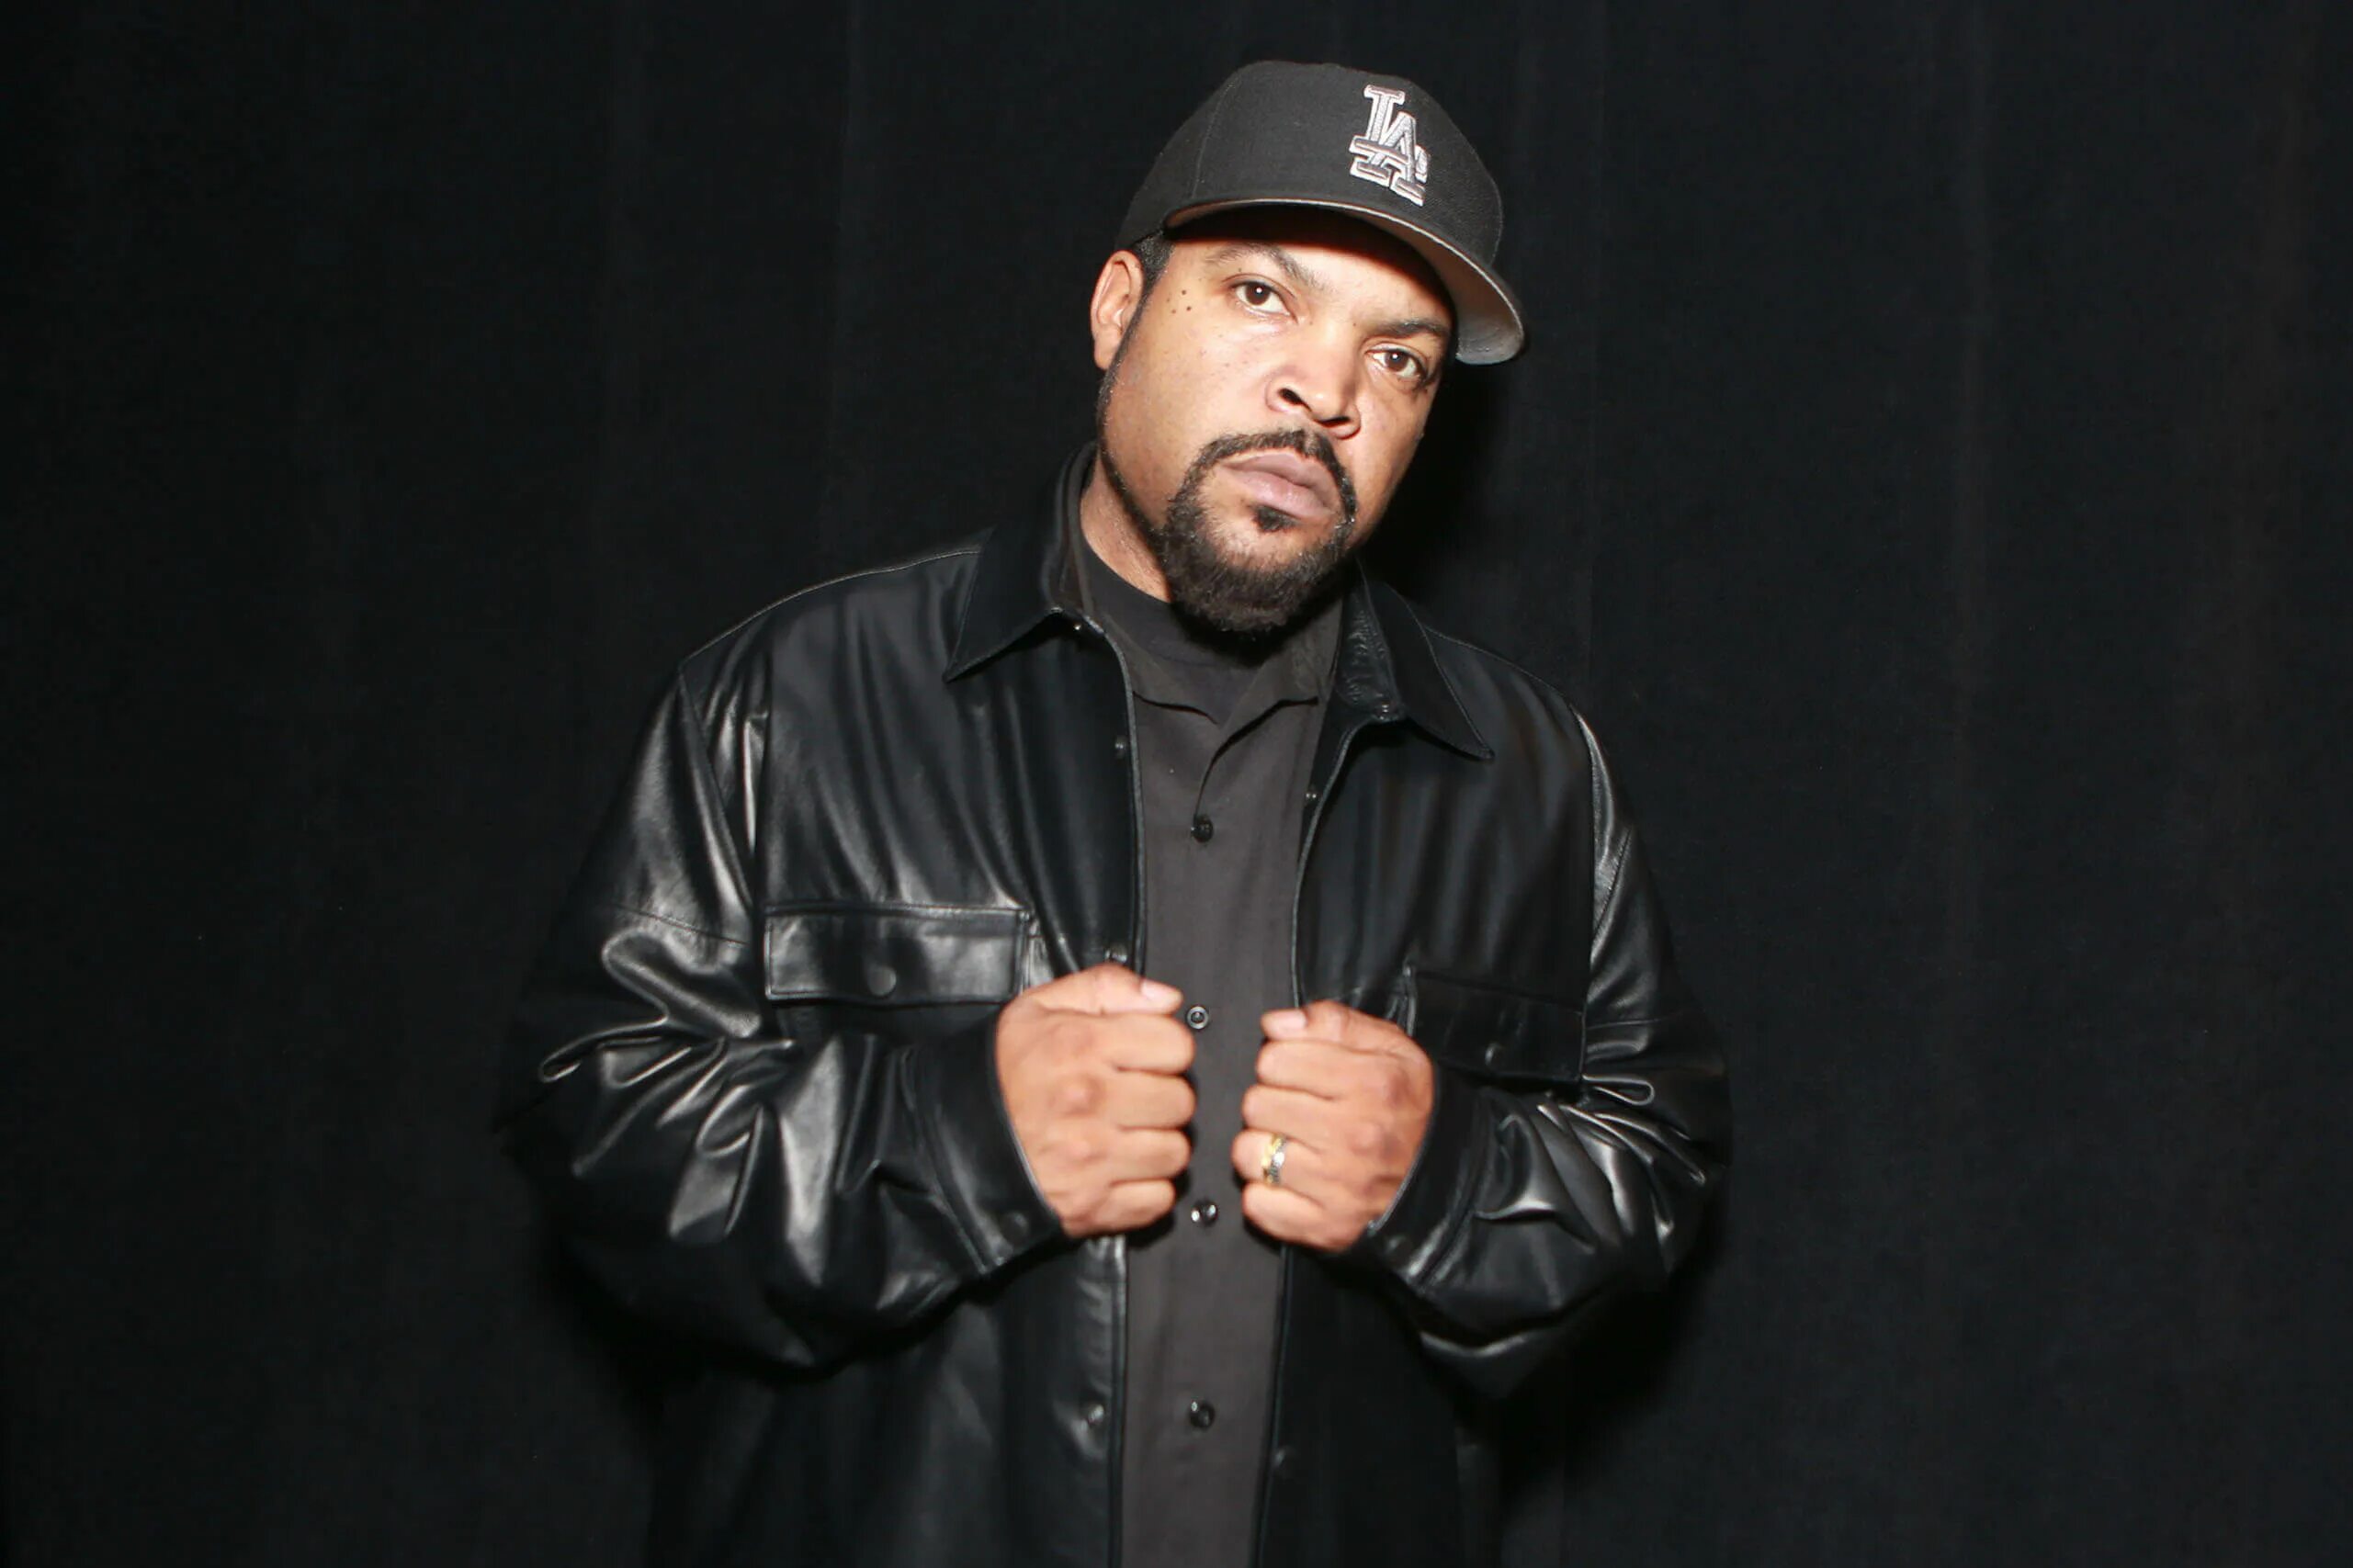 Айс Кьюб (Ice Cube). Айс Кьюб 2022. Ice Cube в 19. Ice Cube 2000. Ice cube method